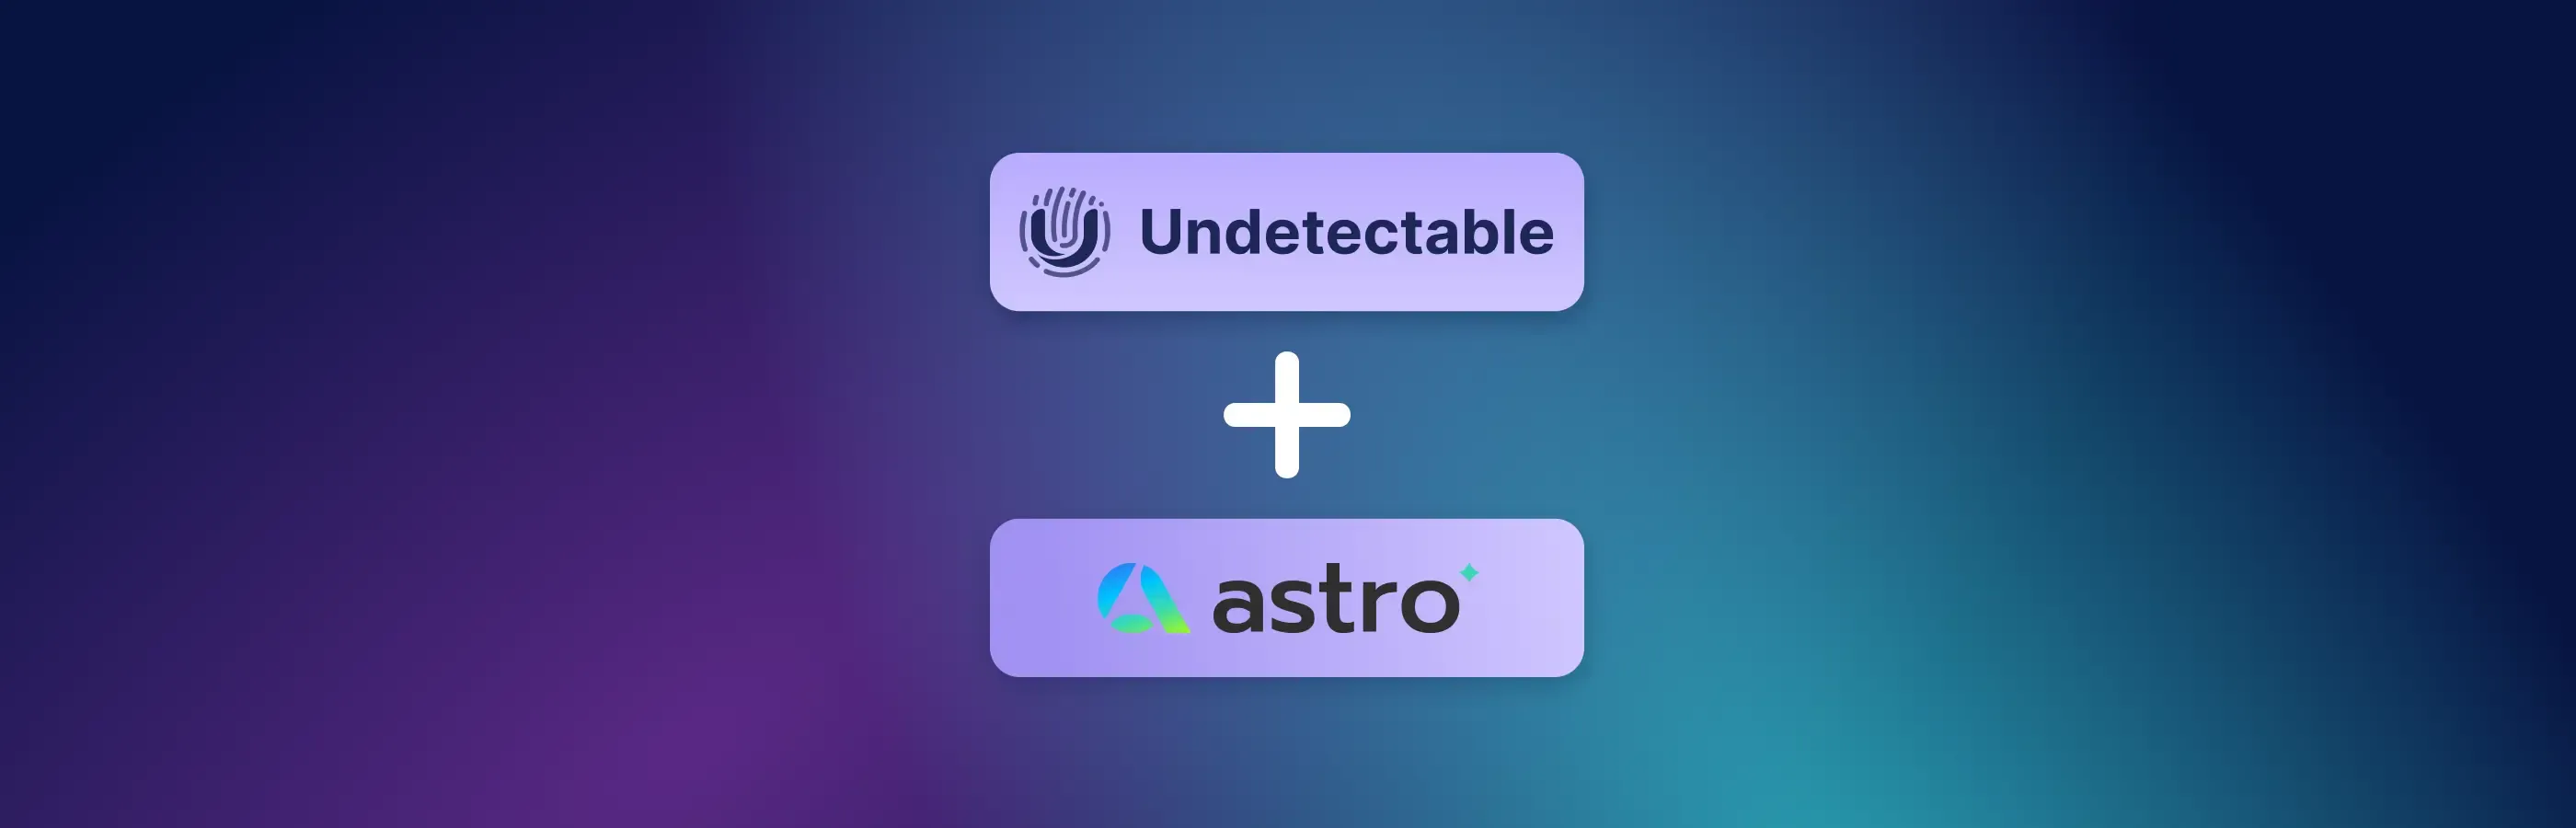 Cách sử dụng Astro với Undetectable